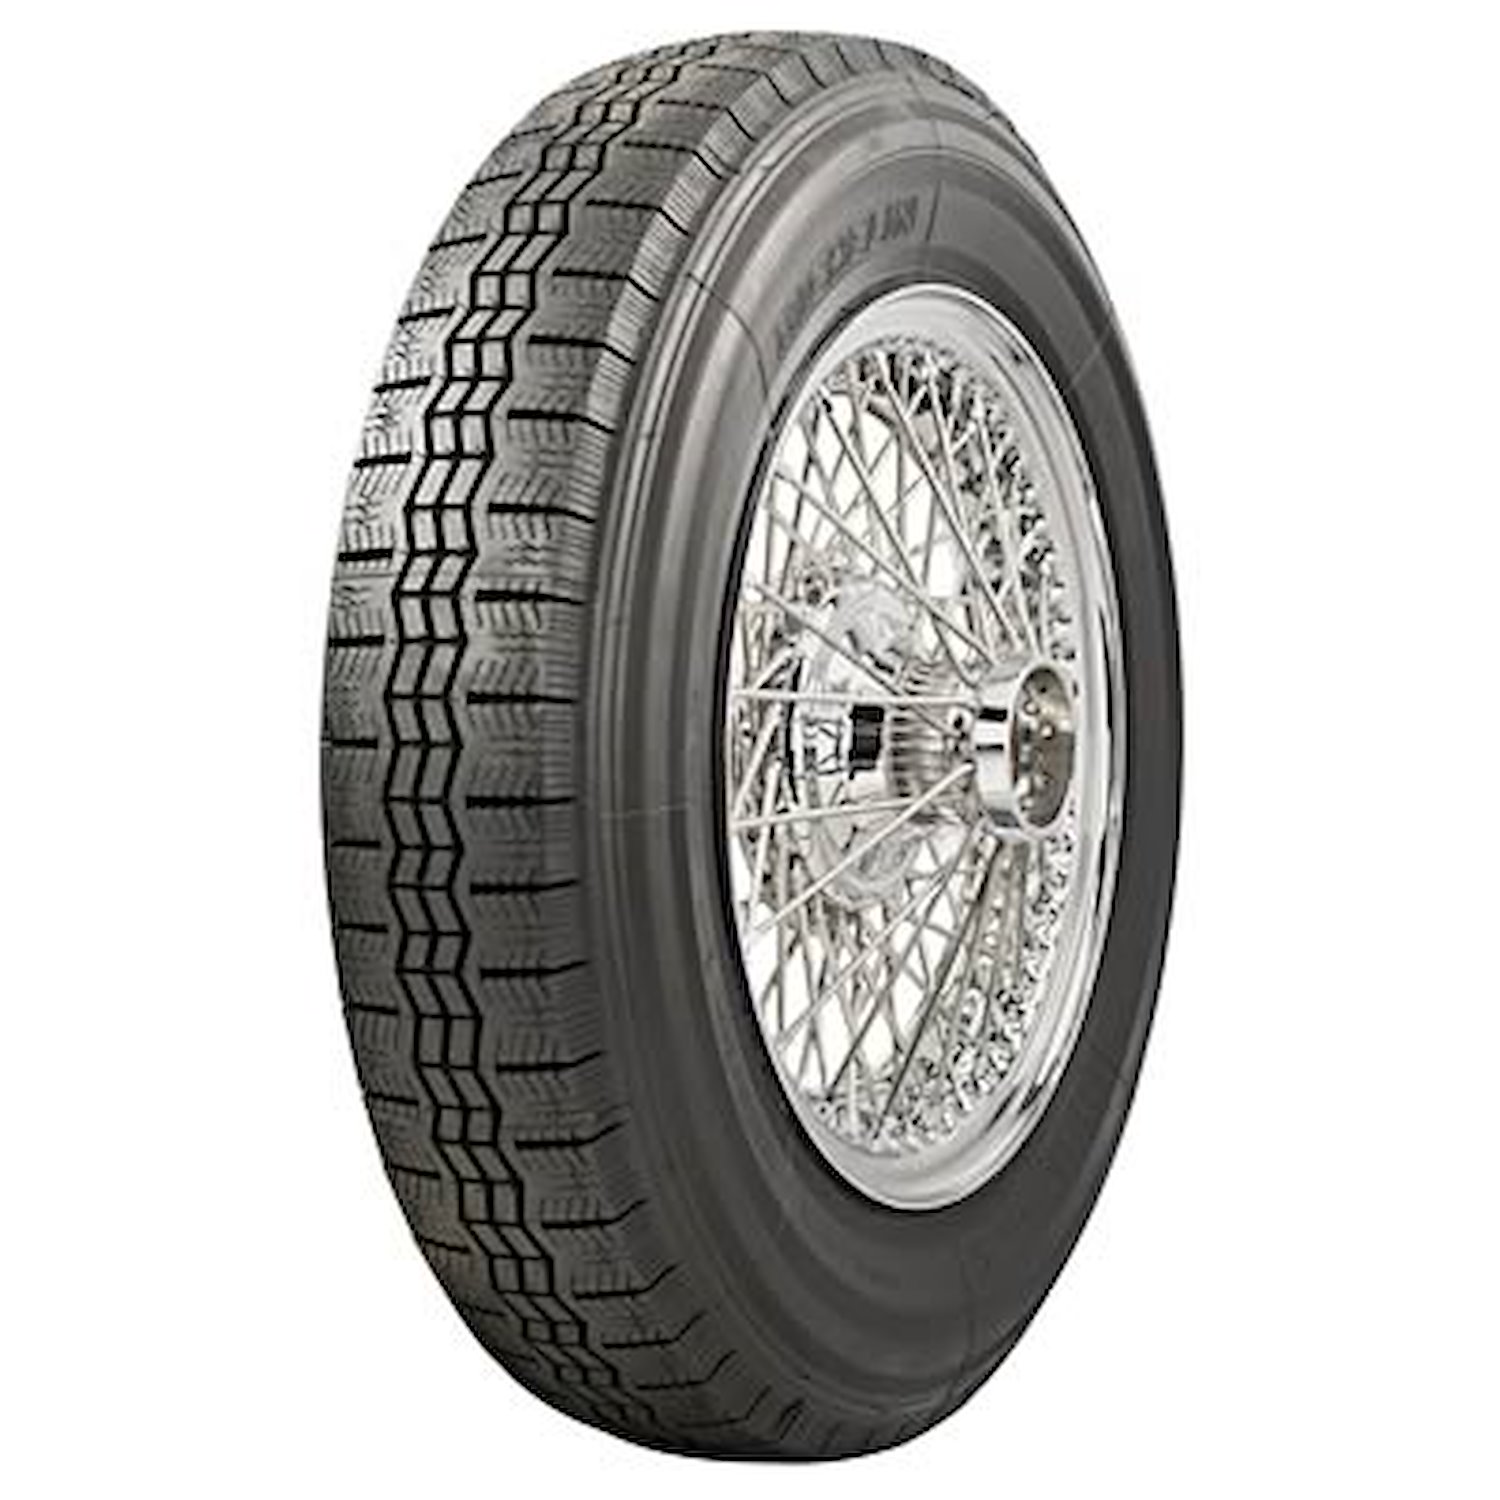 63178 Tire, Michelin X Radial, 135R400 73S